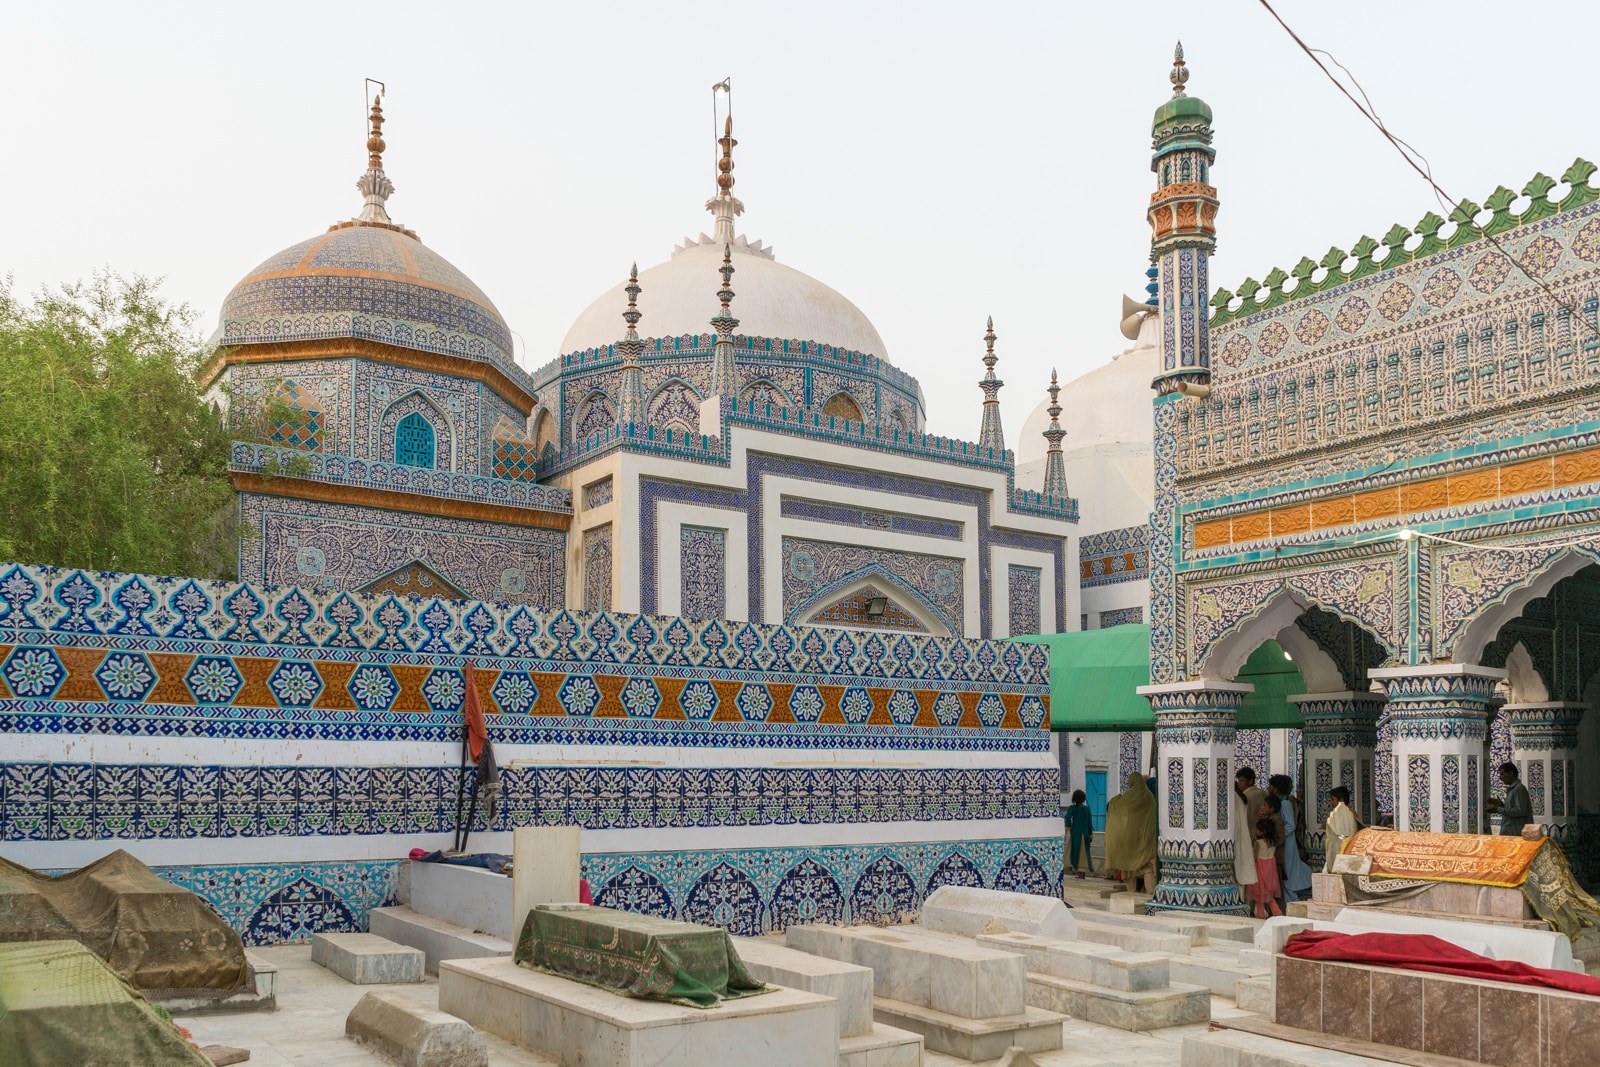 Sindh travel guide - Shrine of Shah Abdul Latif Bhitai in Bhit Shah, Pakistan - Lost With Purpose travel blog